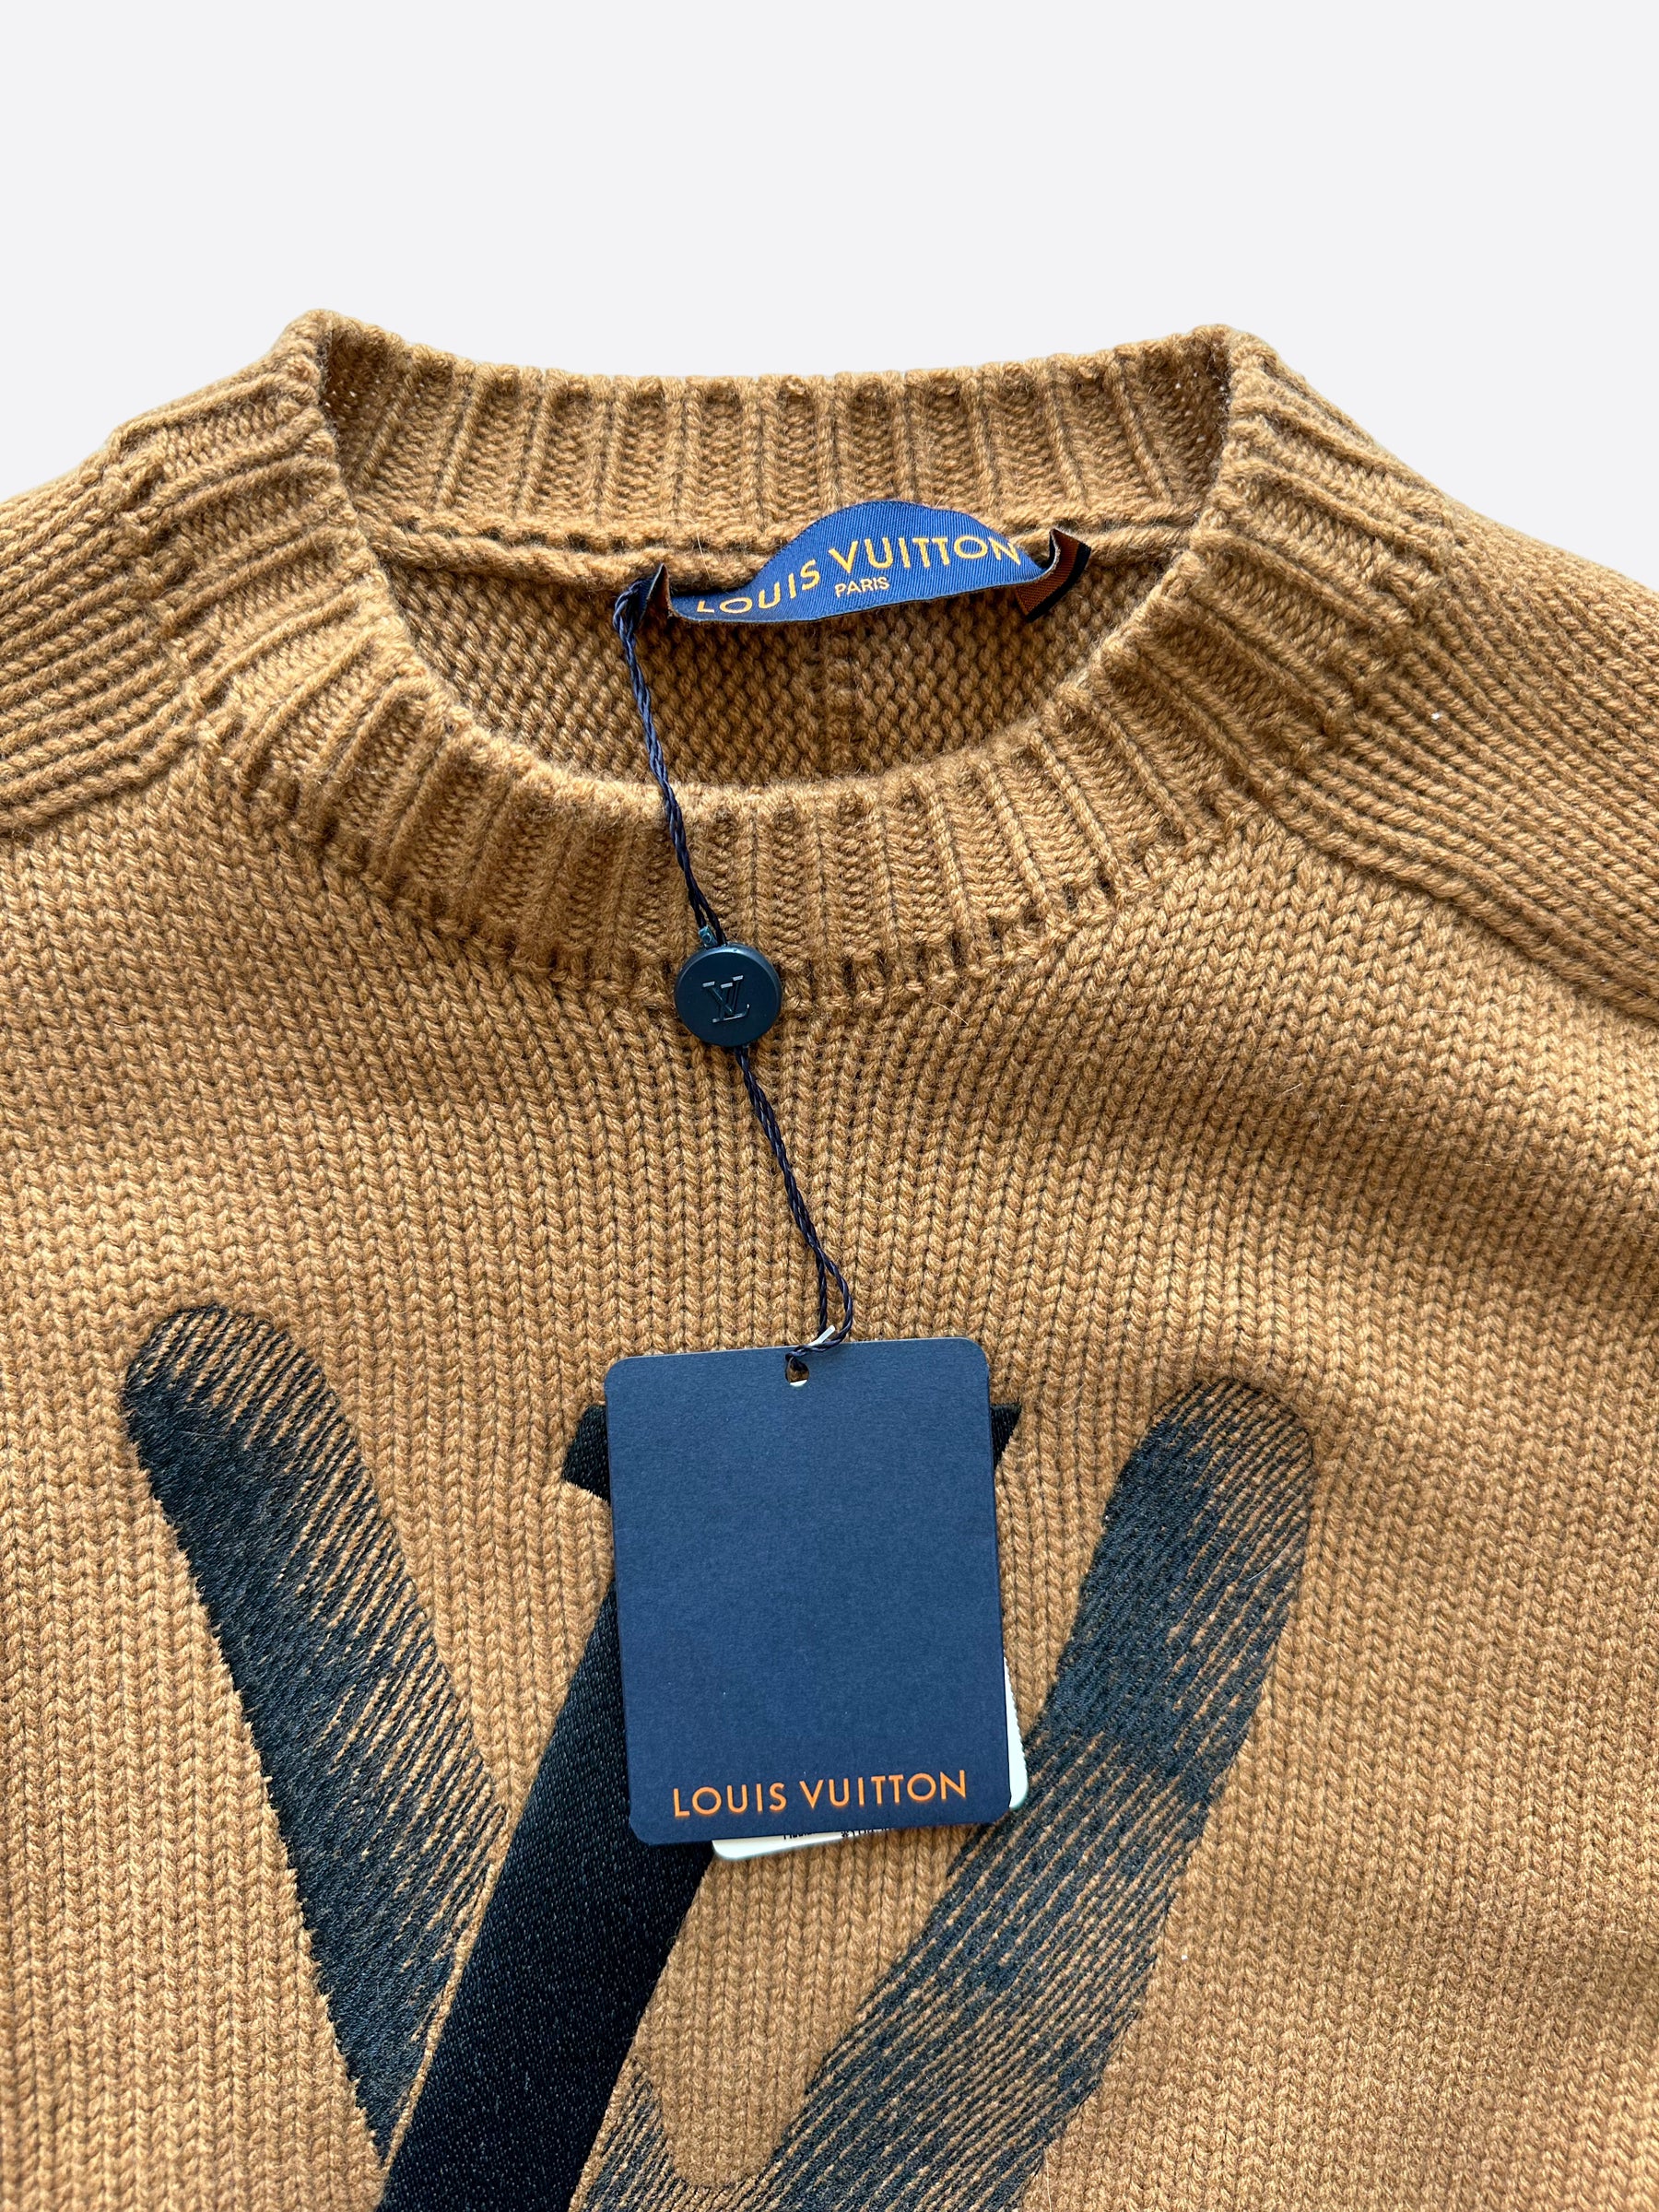 Shop Louis Vuitton Men's Brown Sweatshirts